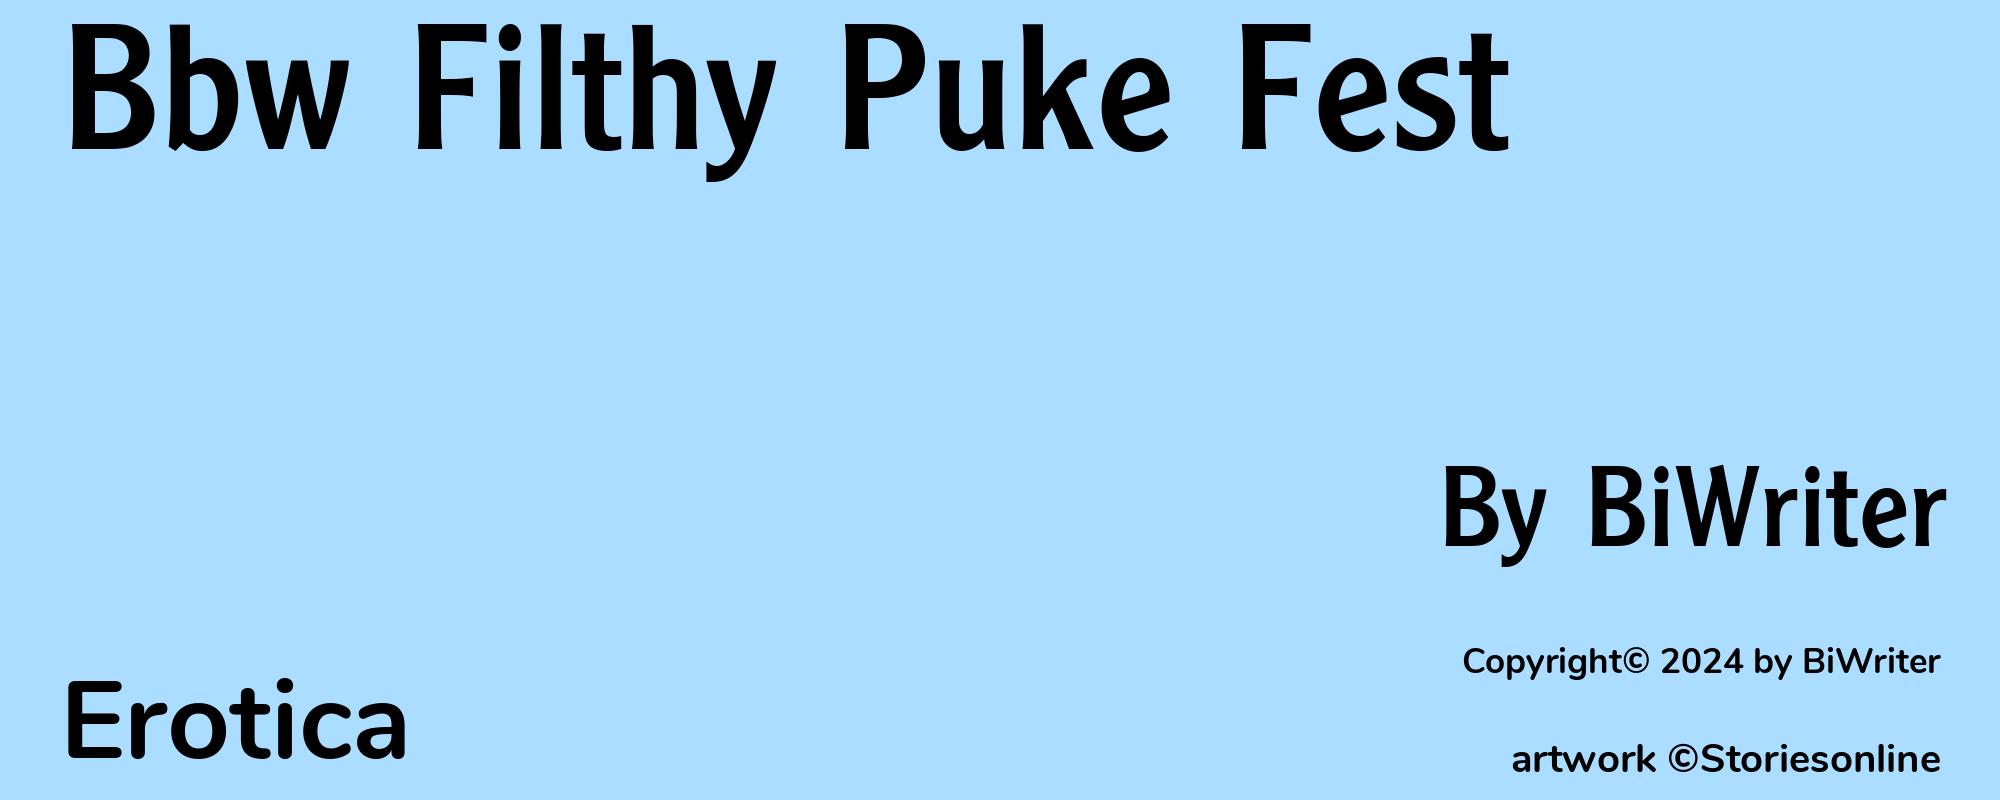 Bbw Filthy Puke Fest - Cover